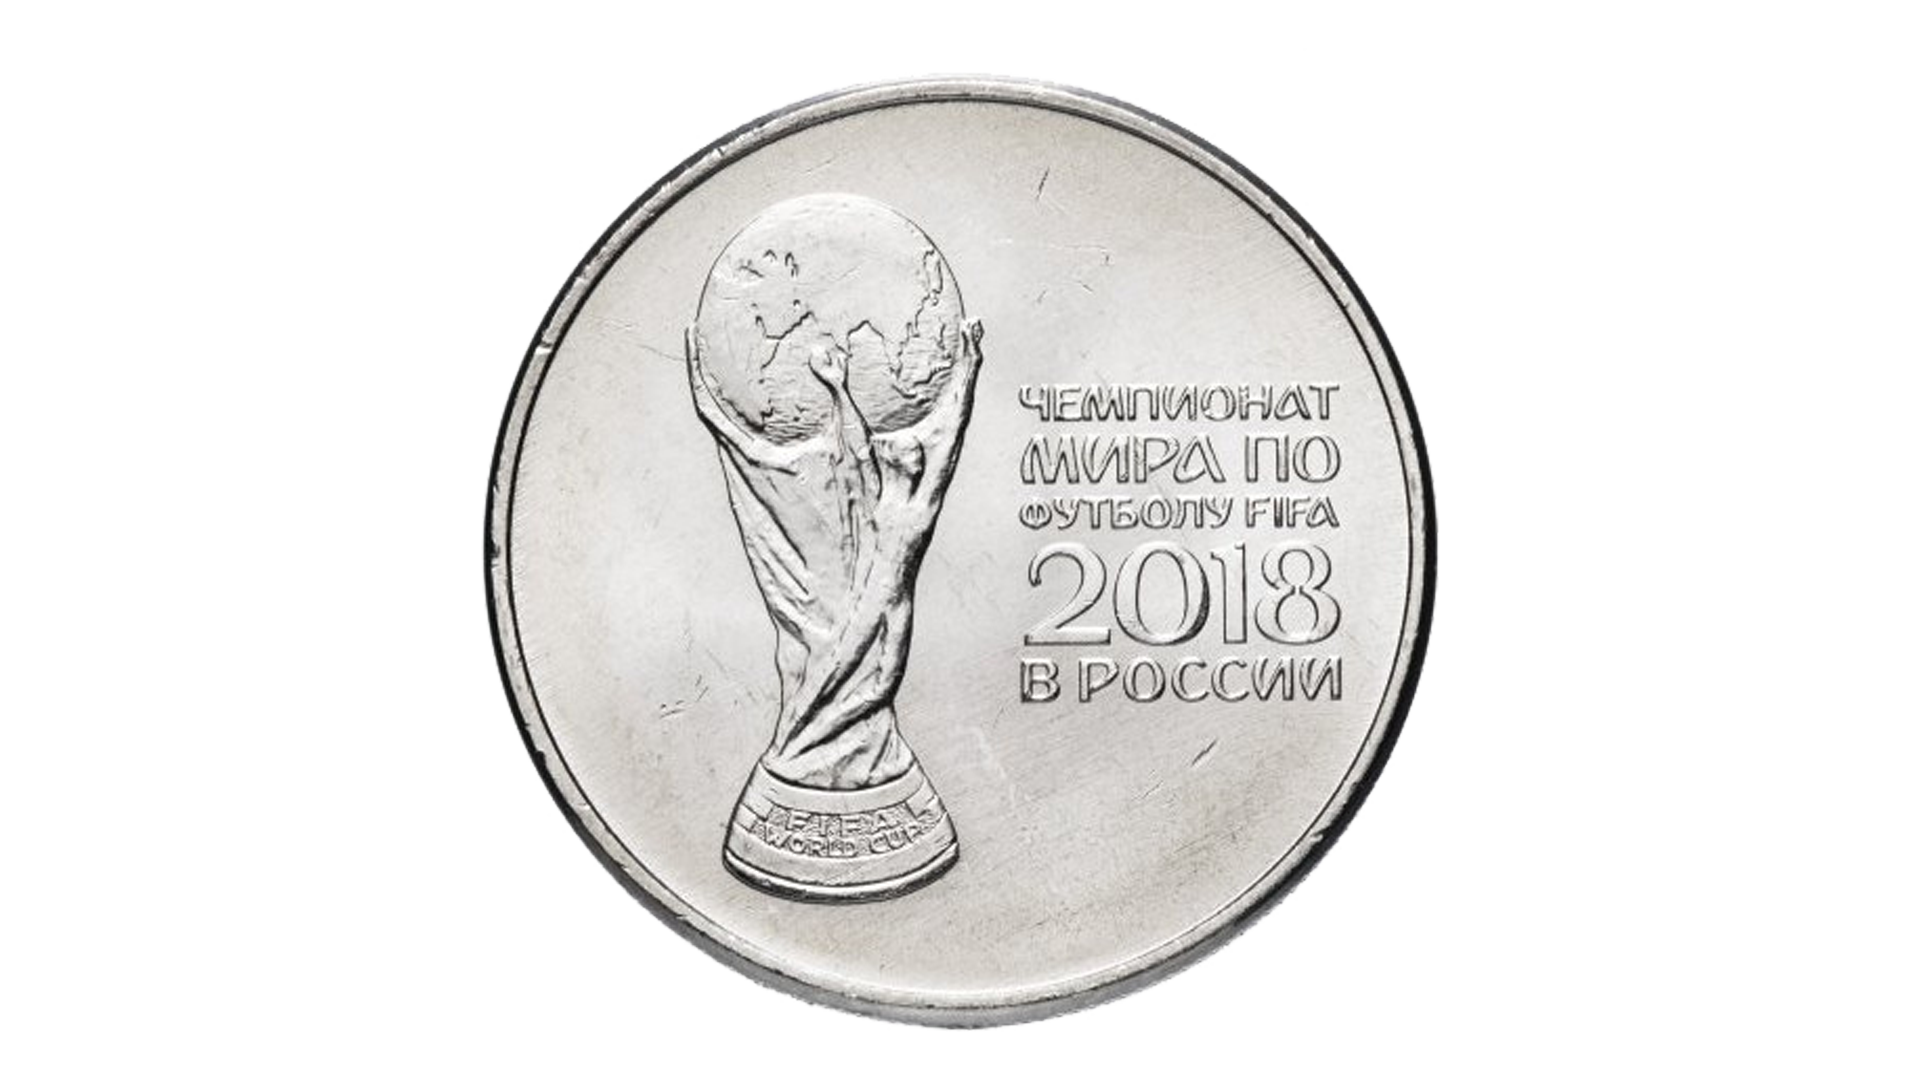 Сколько стоят 25 рублей фифа 2018. 25р монетой 2018 ФИФА.